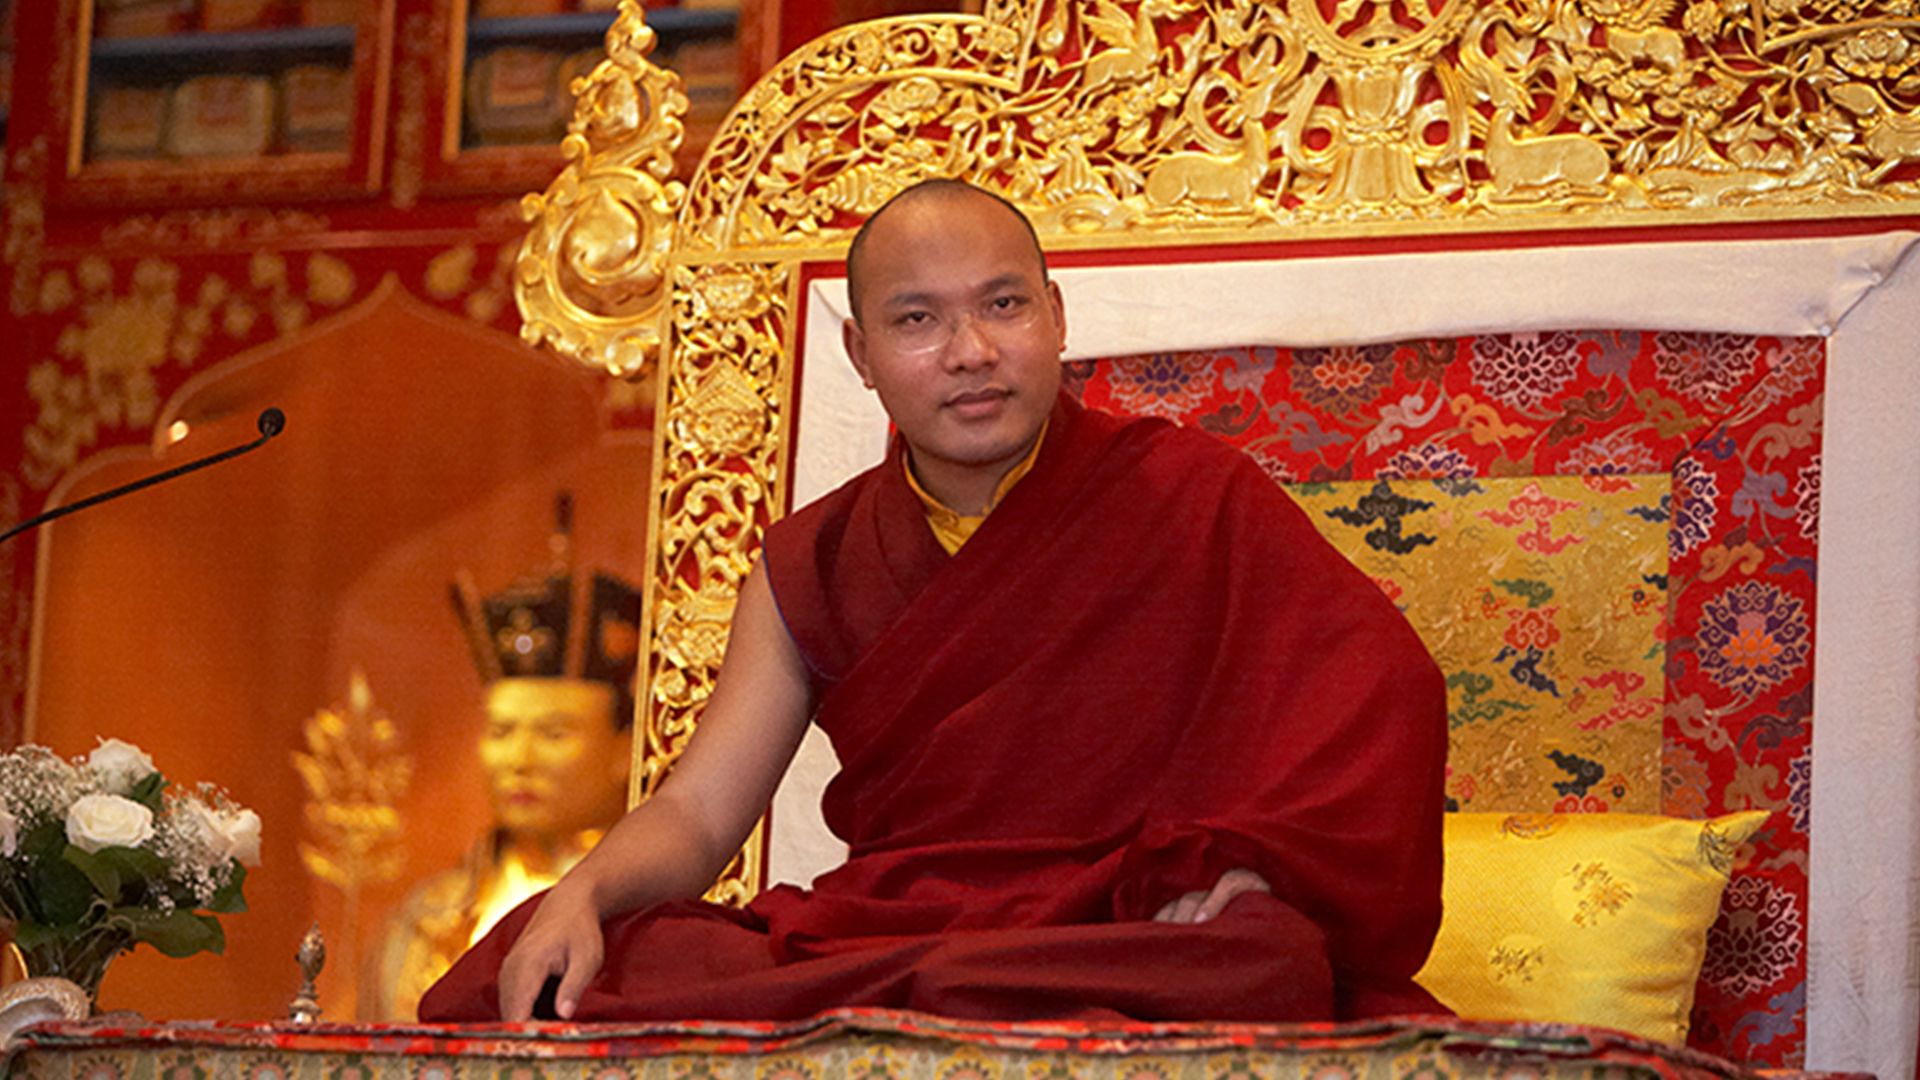 The 17th Gyalwang Karmapa ogyen Trinley Dorje will lead aspirations to end adversity